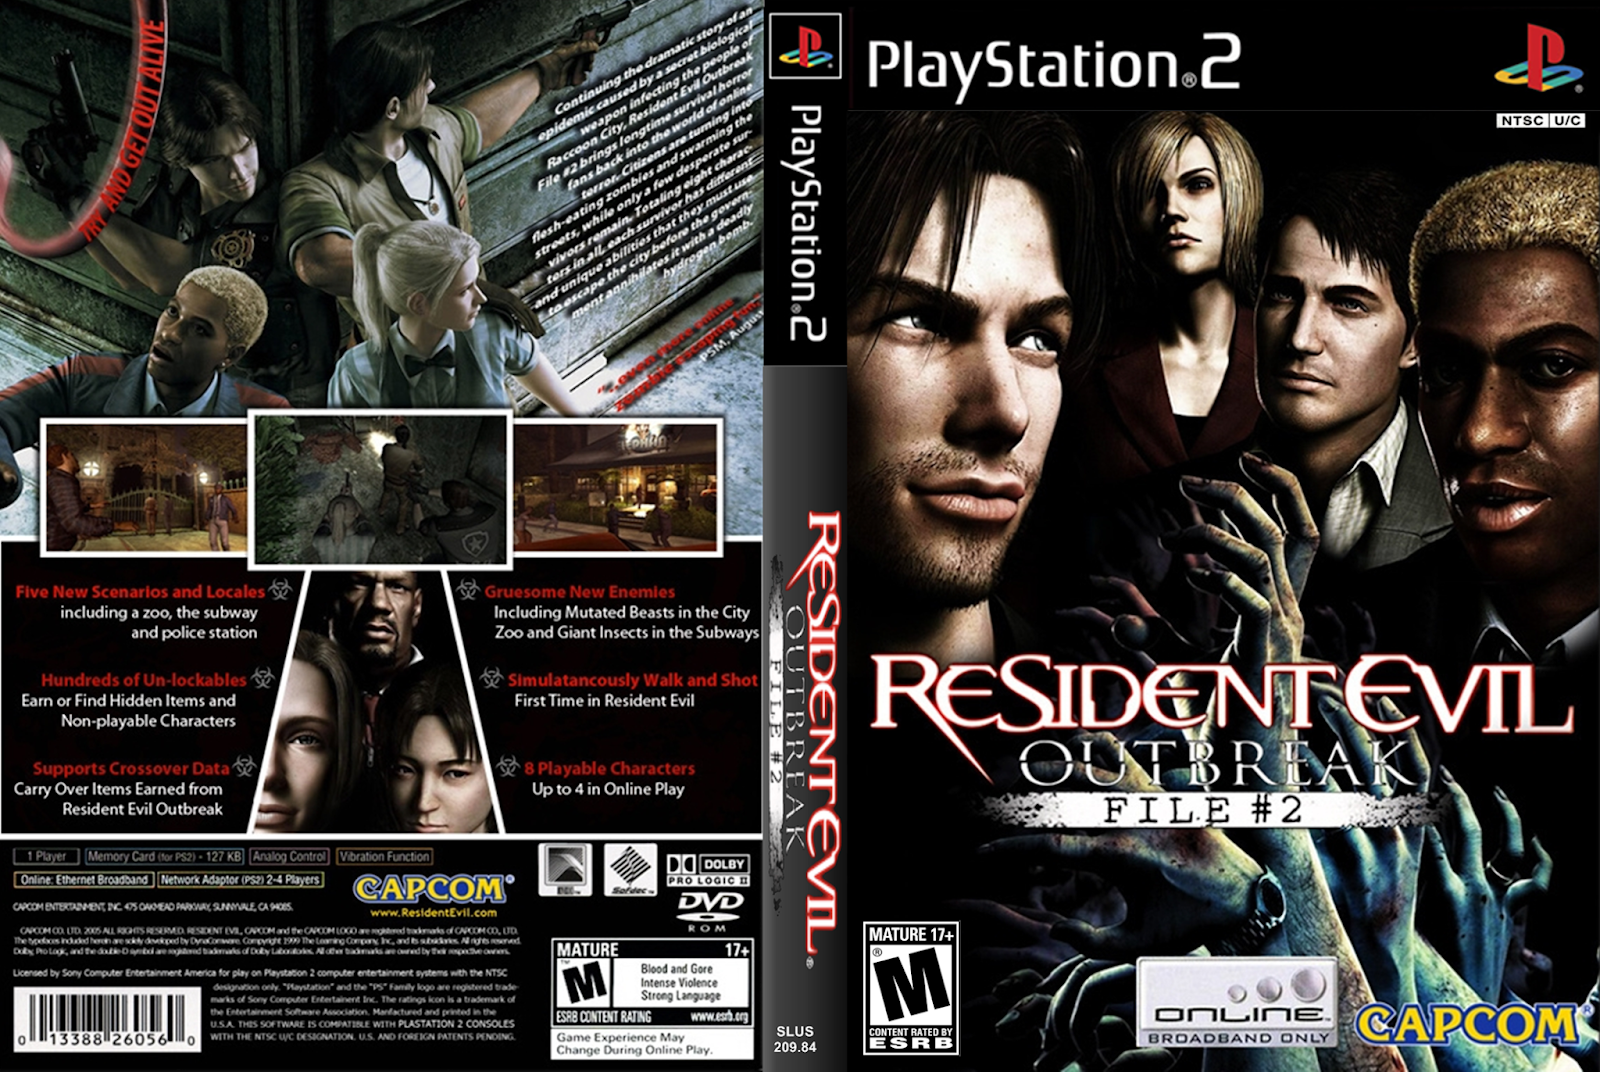 Резидент на пс 2. Resident Evil - Outbreak - file #2 PLAYSTATION 2. Resident Evil 4 ps2 обложка. Resident Evil Outbreak file 2 ps2 обложка.